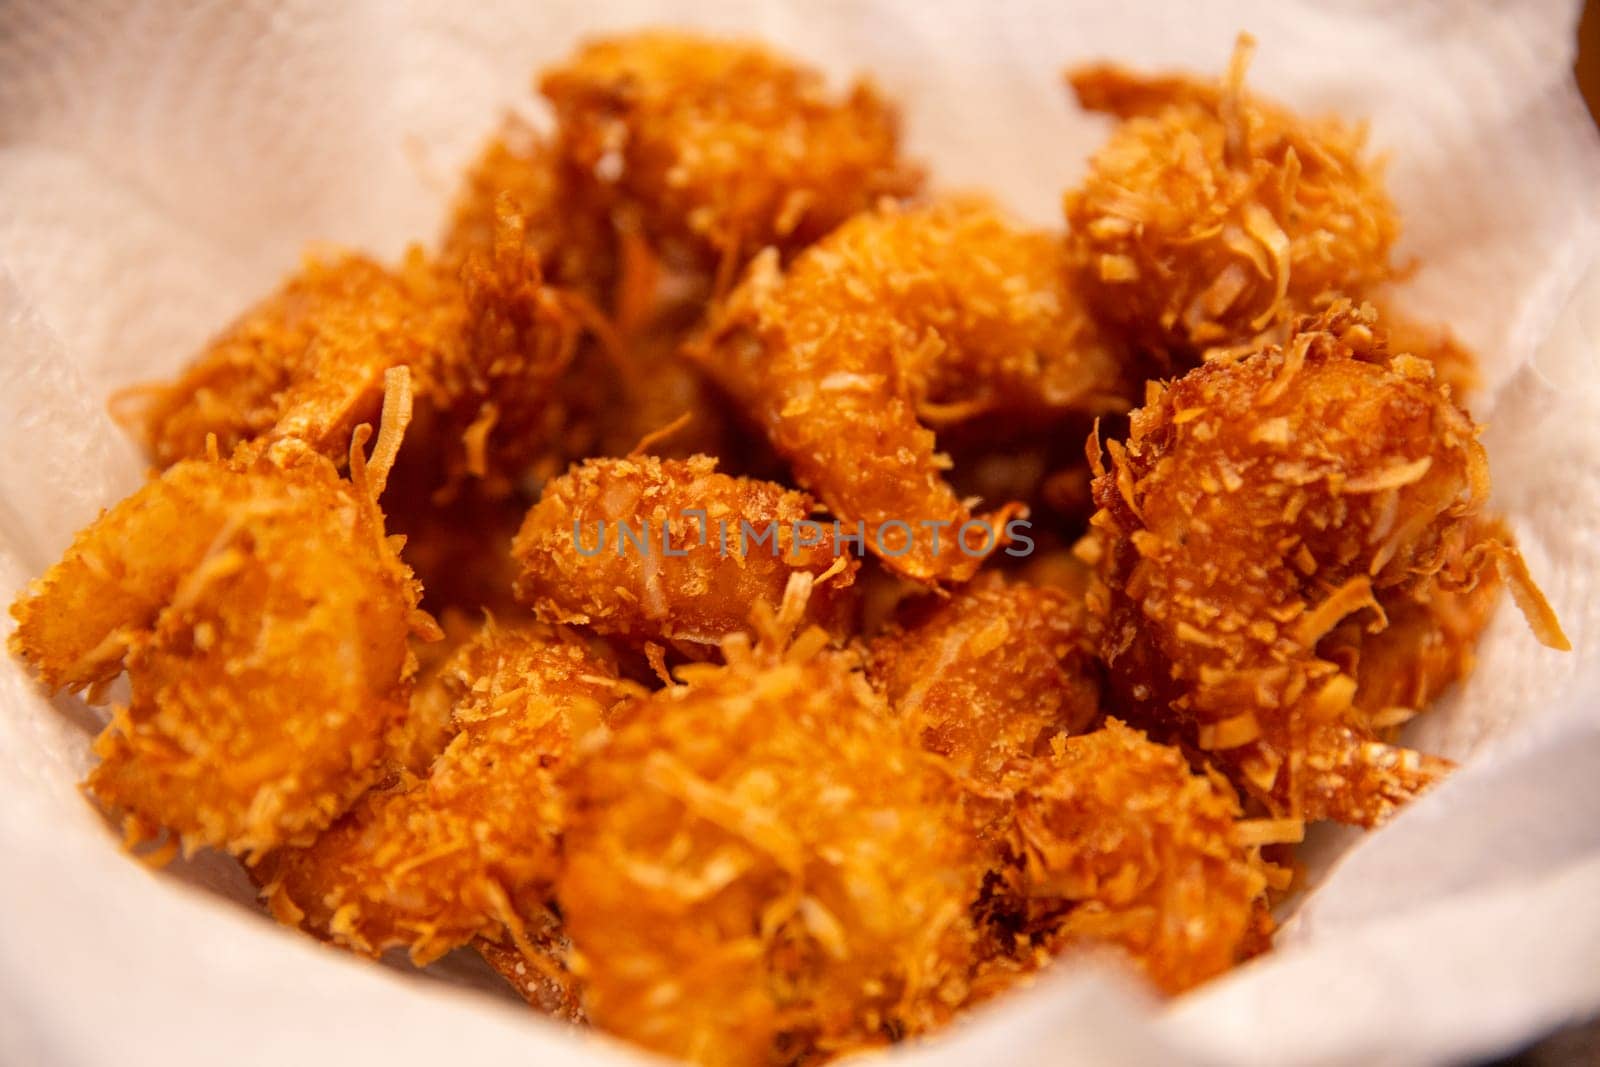 Fresh Fried Coconut Shrimp by TopCreativePhotography